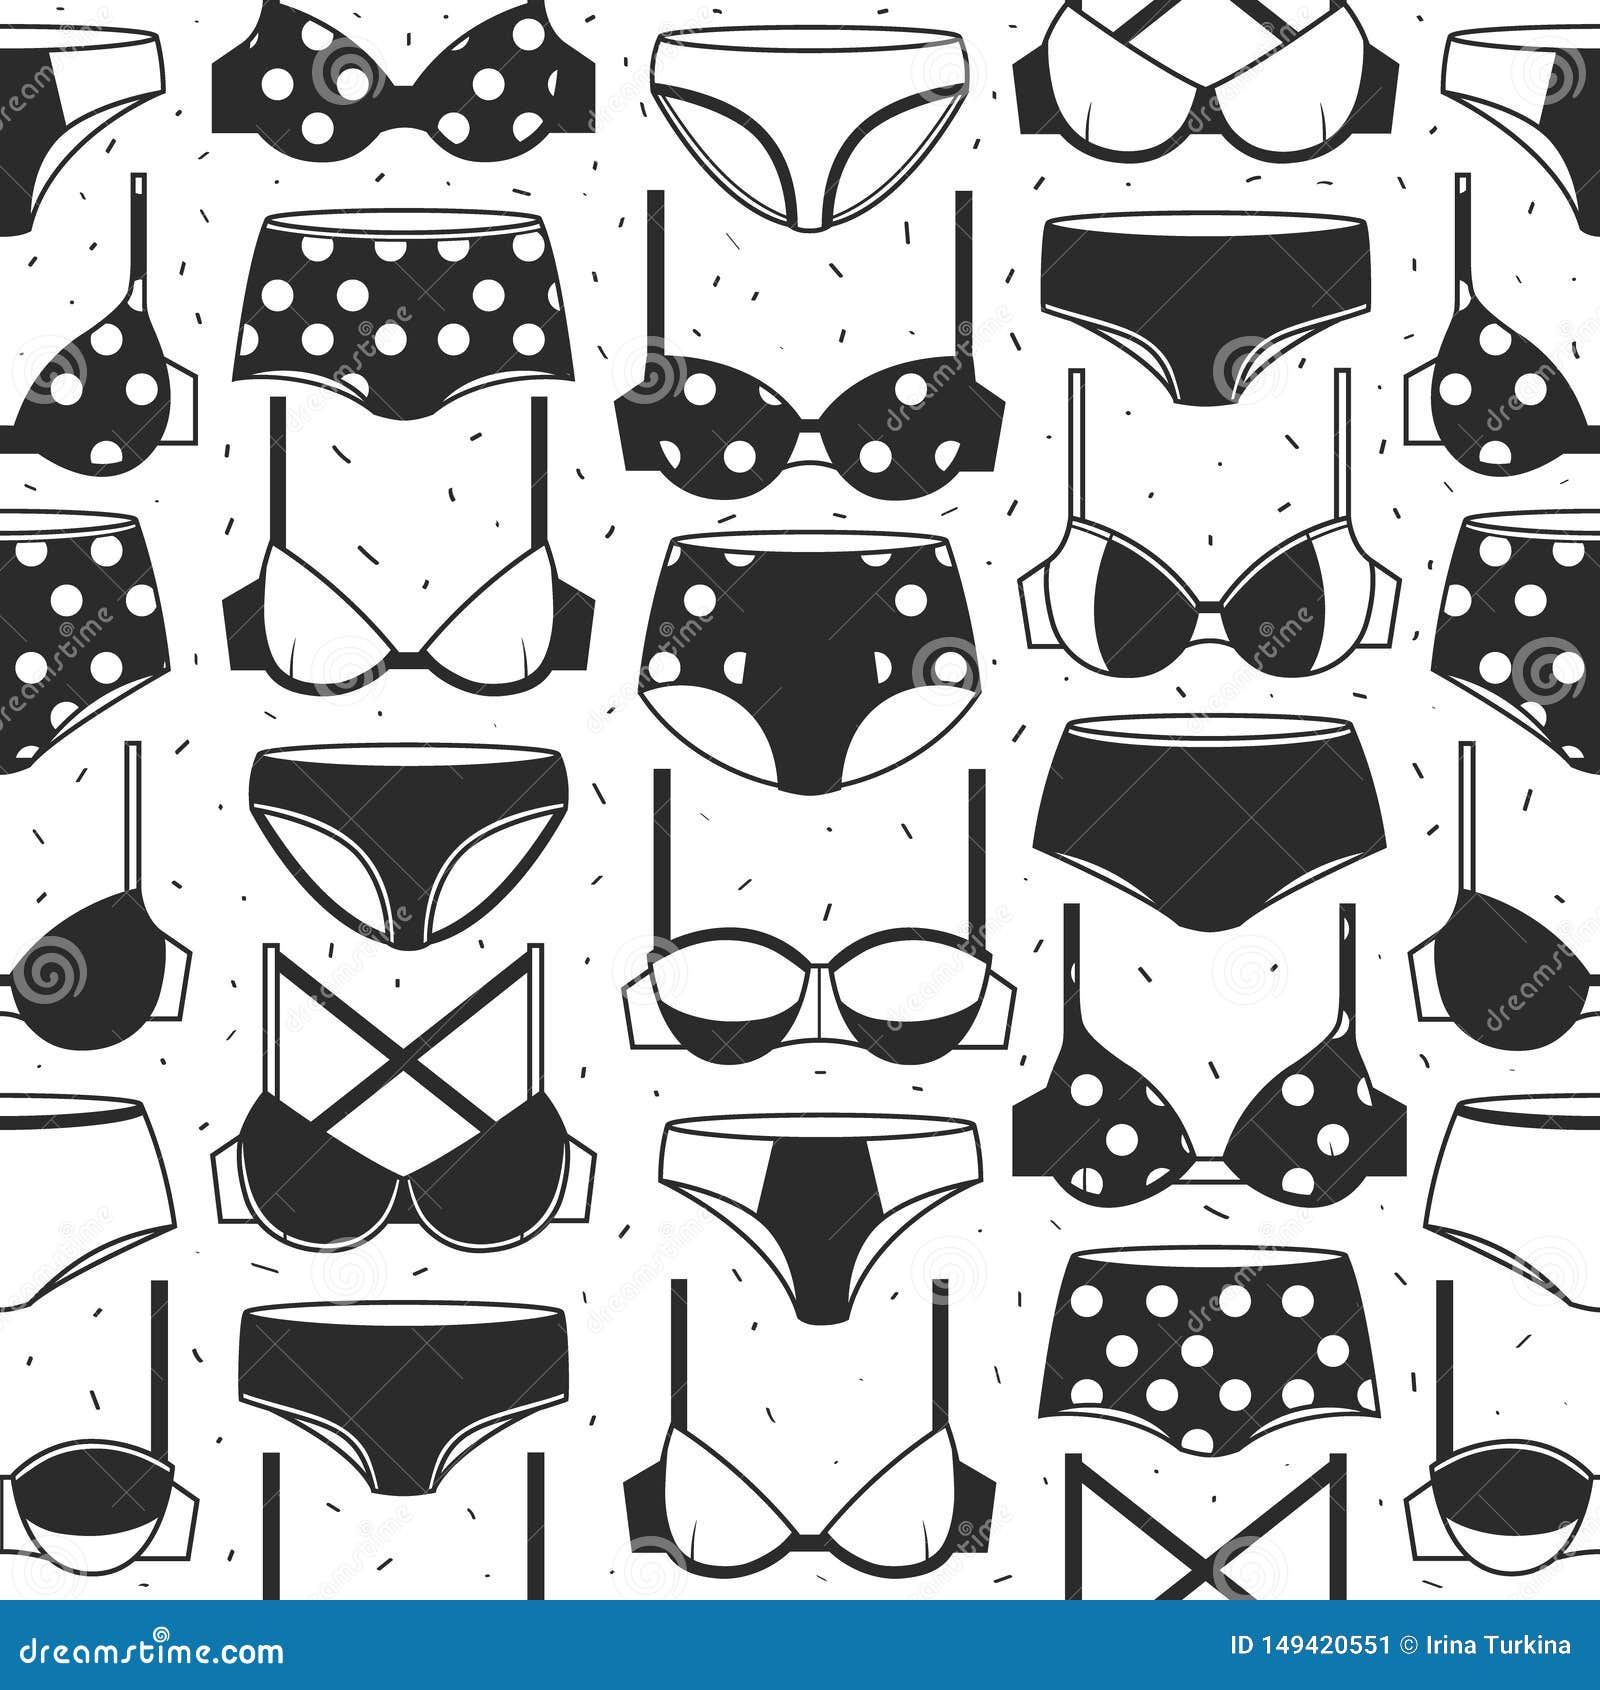 Women`s Underwear Lingerie Bras Panties, Lips, Lipstick, Flowers Set  Stickers Stock Vector - Illustration of graphic, clothes: 172359225